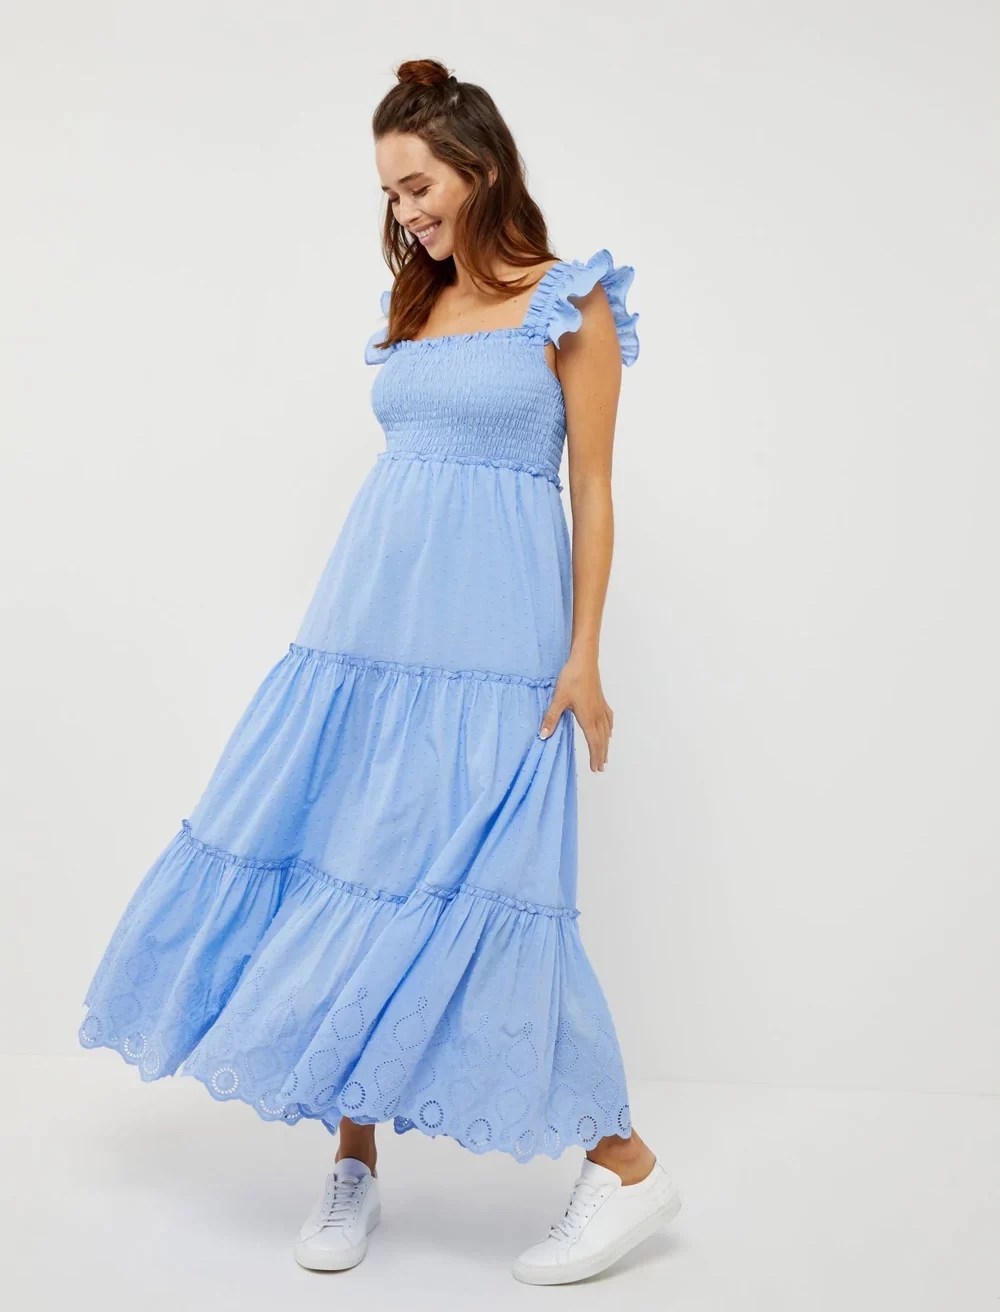 Pietro Brunelli Chloe Ruffle Sleeve Maternity Dress, best maternity photoshoot dresses